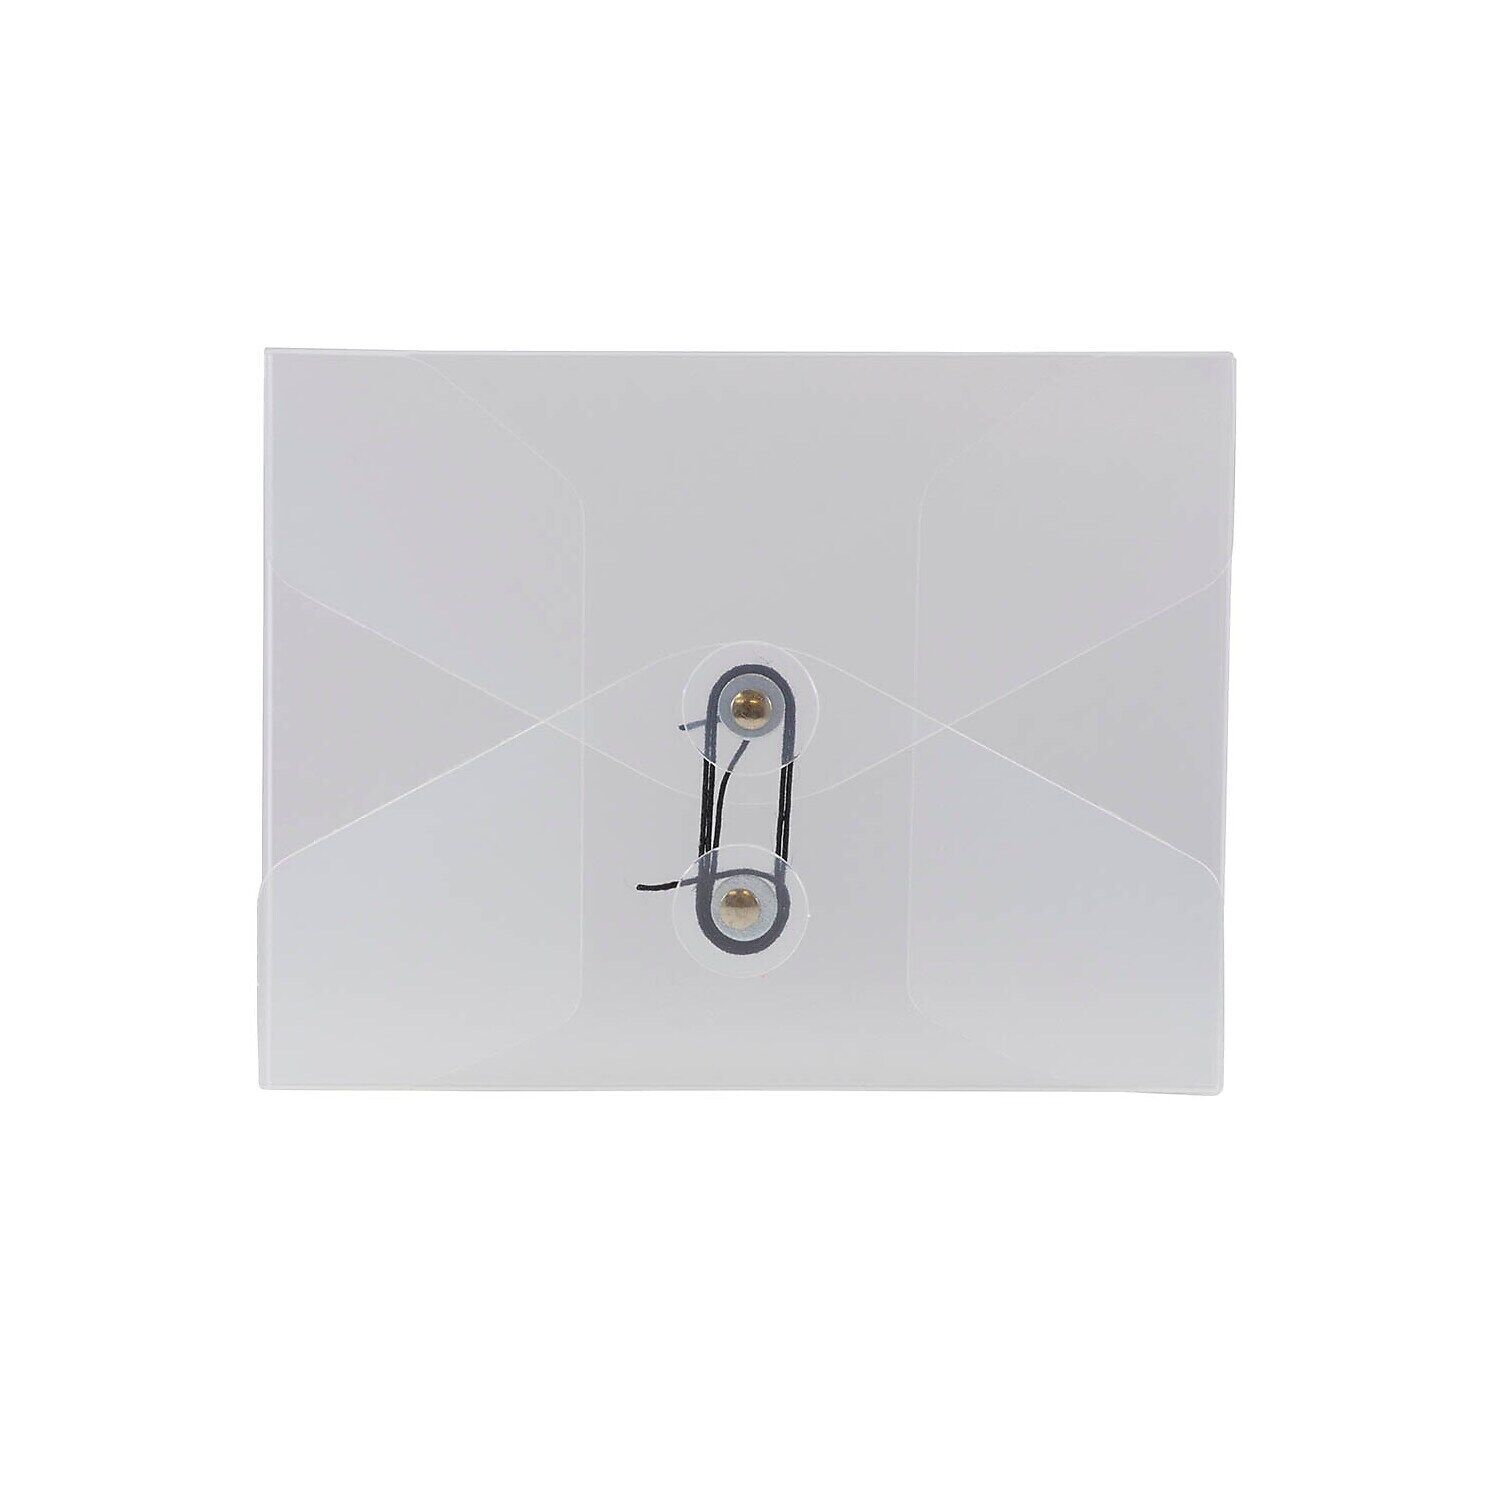 JAM Paper Plastic Portfolio with Button & String Closure Small 5 1/4 x 6 3/4 x